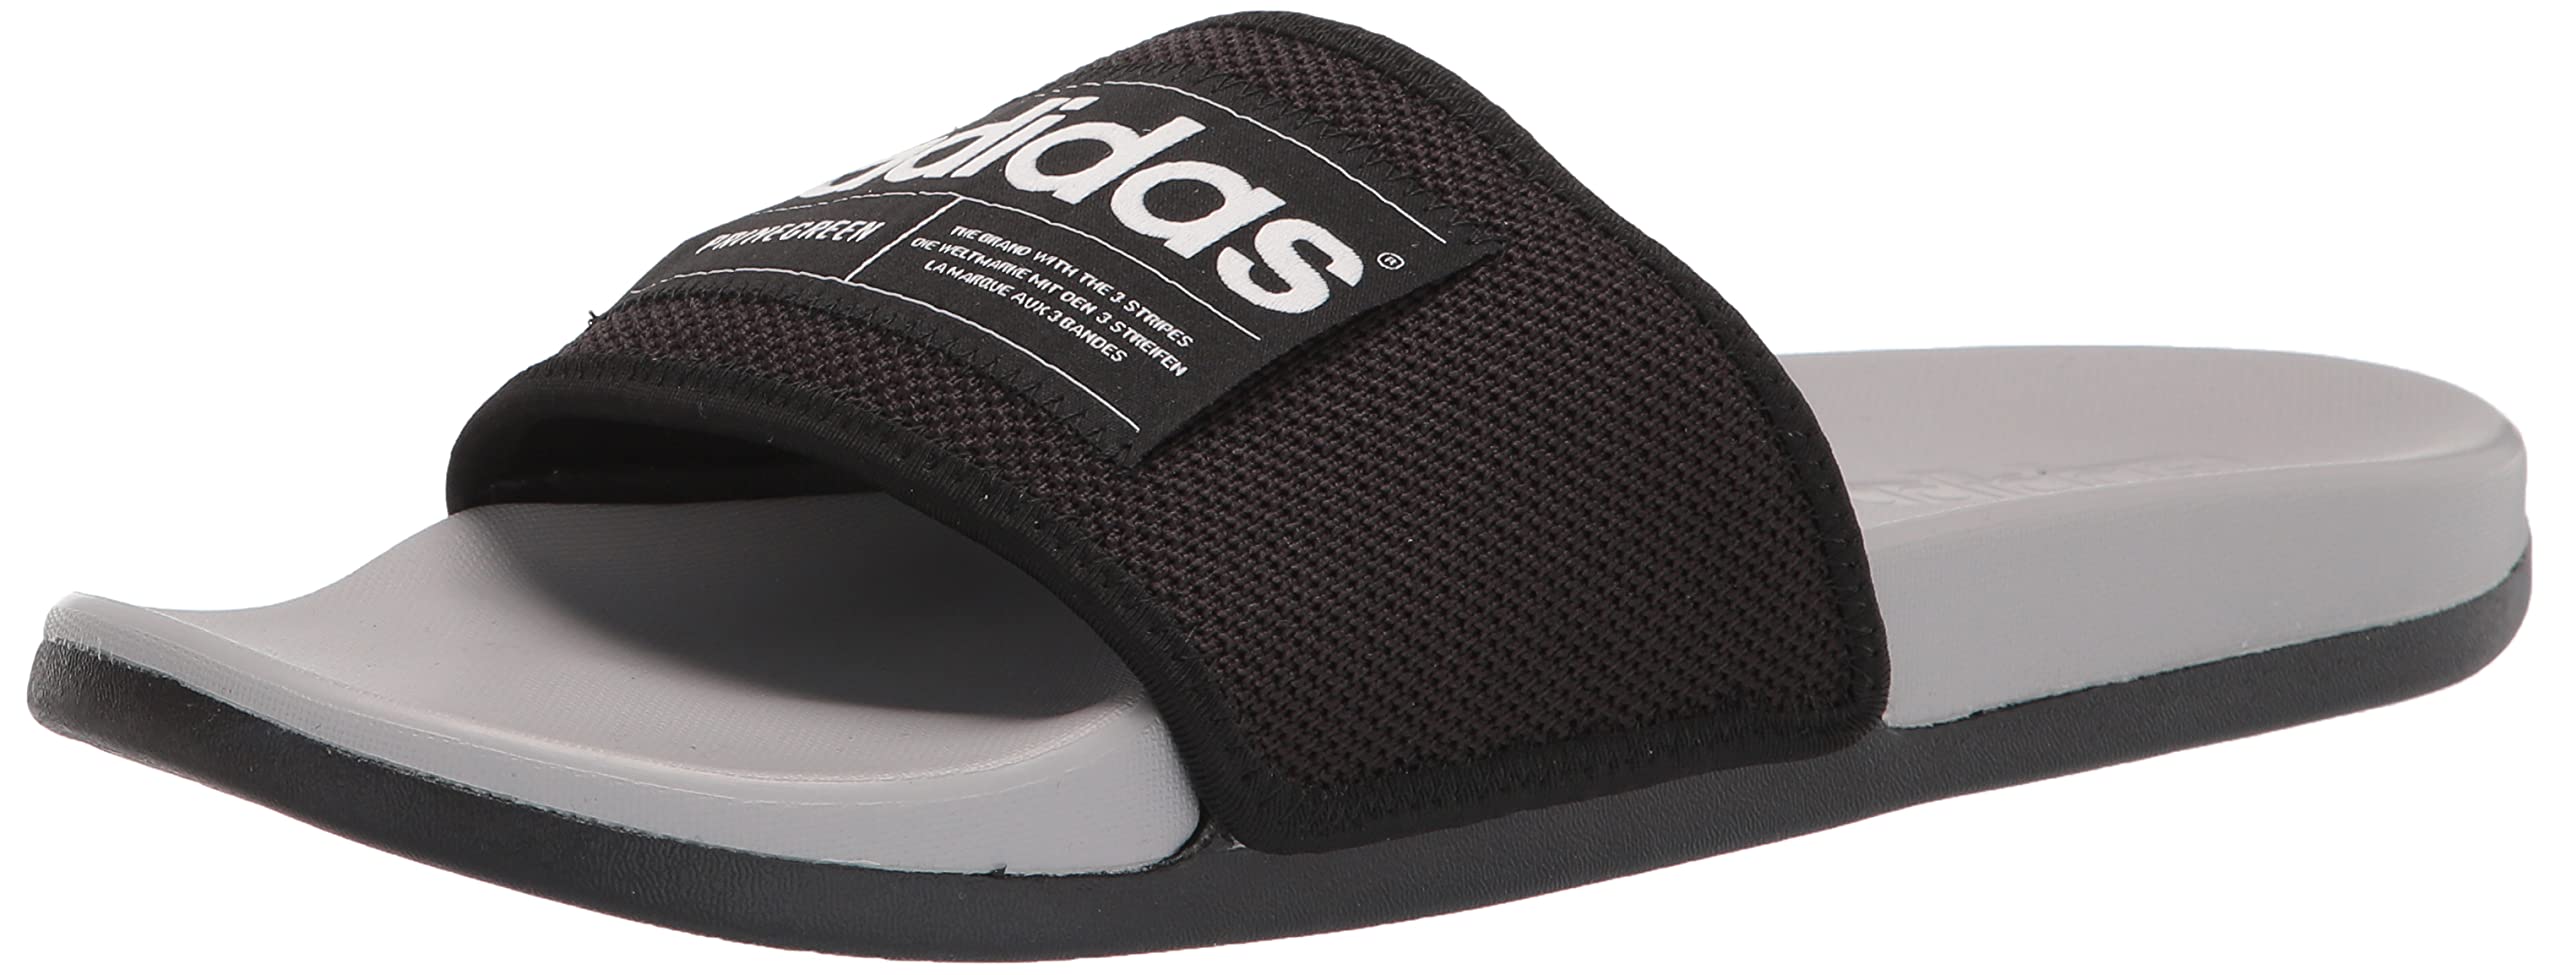 adidas Women's & Men's Adilette Comfort Slide Sandal (Black/White/Grey, Size 4-13) $12 + Free Shipping w/ Prime or $25+